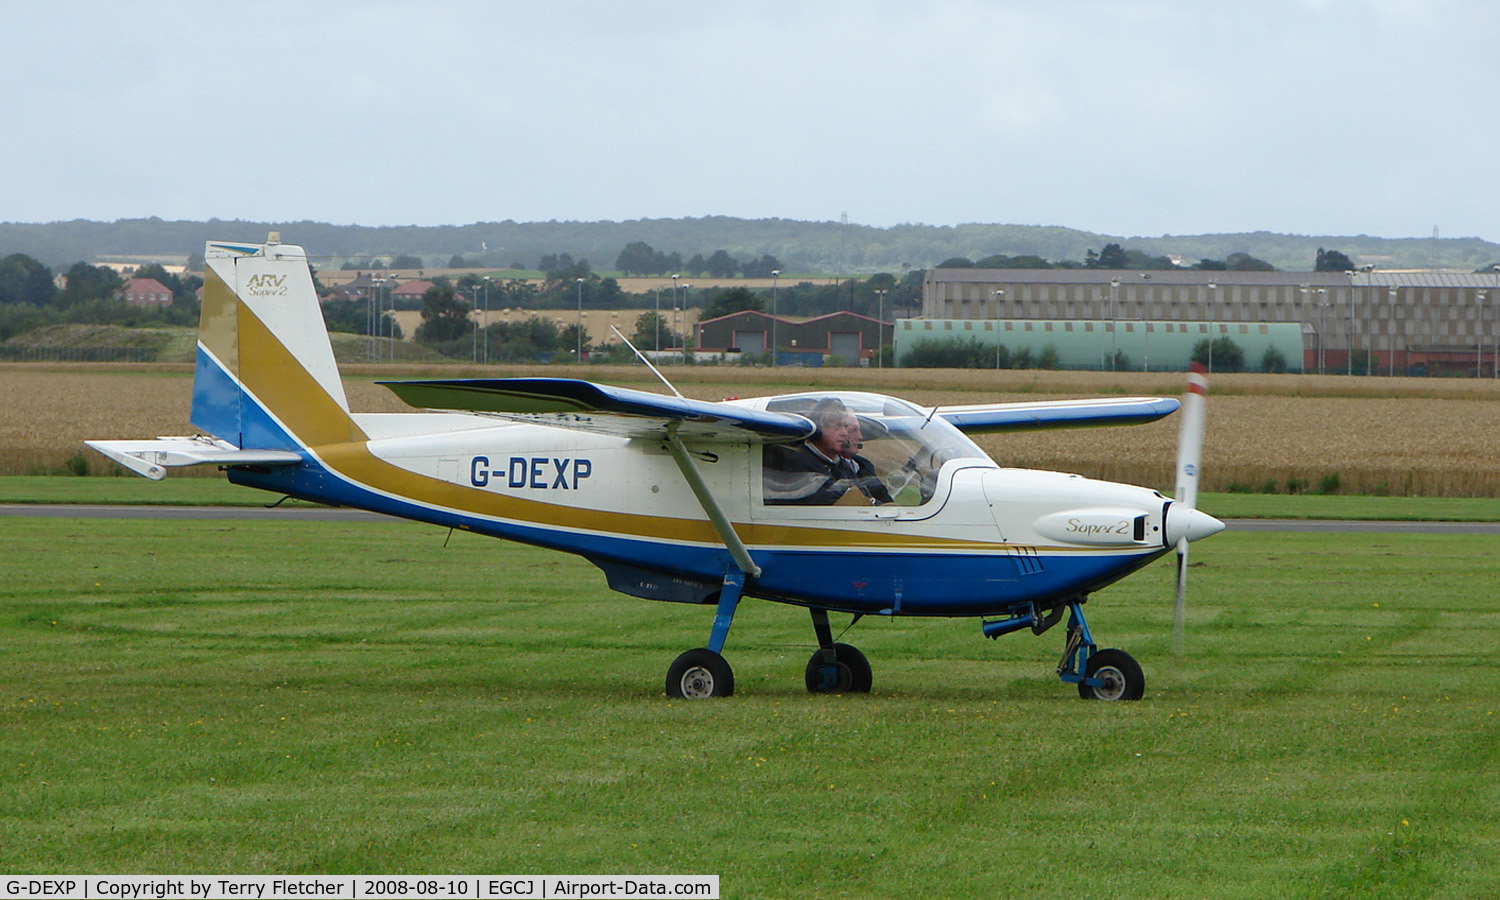 G-DEXP, 1986 ARV ARV1 Super 2 C/N PFA 152-11154, Visitor to the 2008 LAA Regional Fly-in at Sherburn